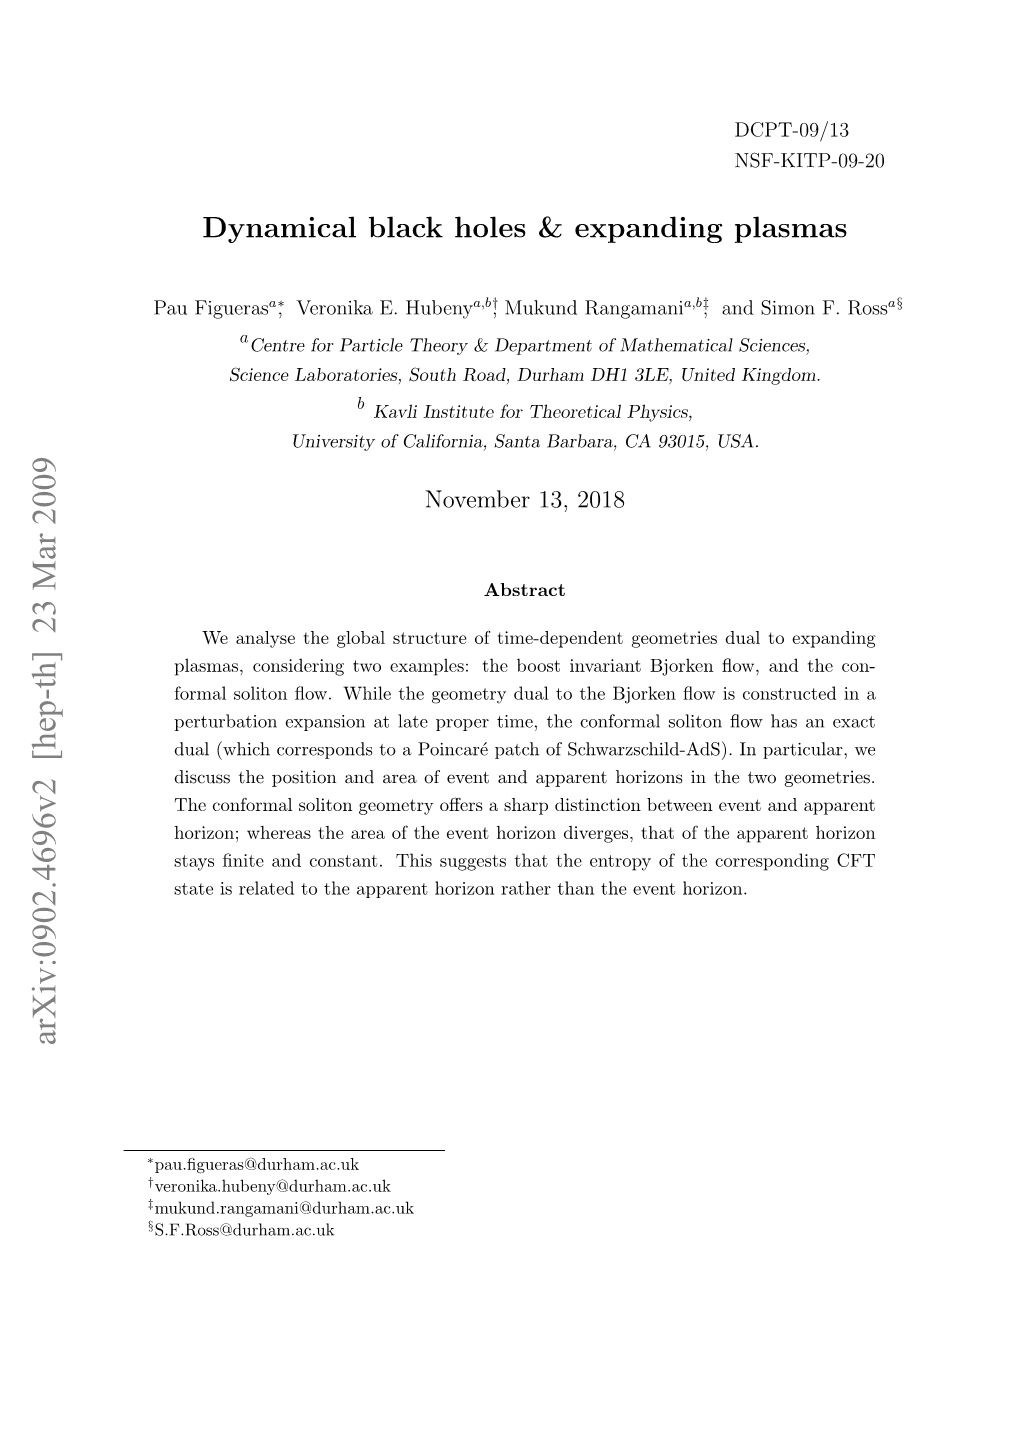 Dynamical Black Holes and Expanding Plasmas